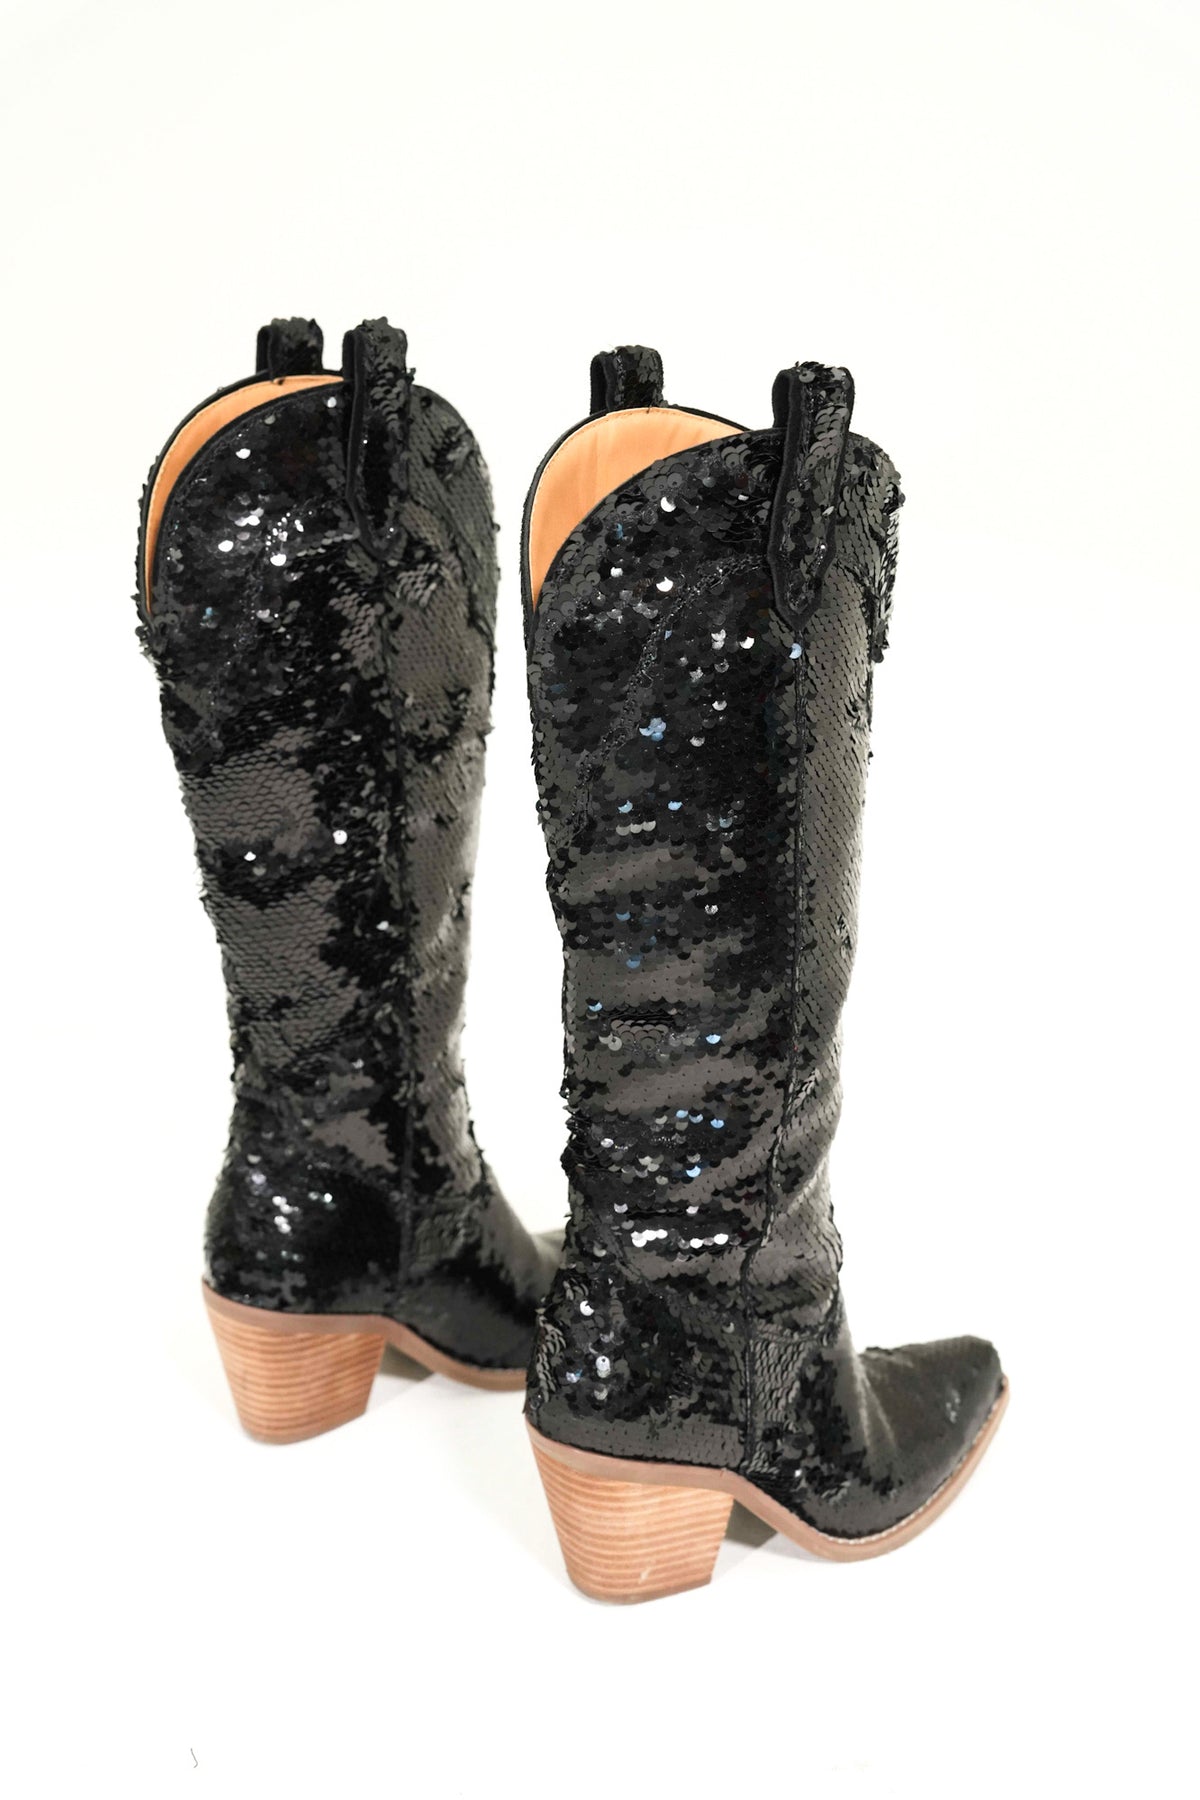 Dance Hall Queen Fabric Boot in Black